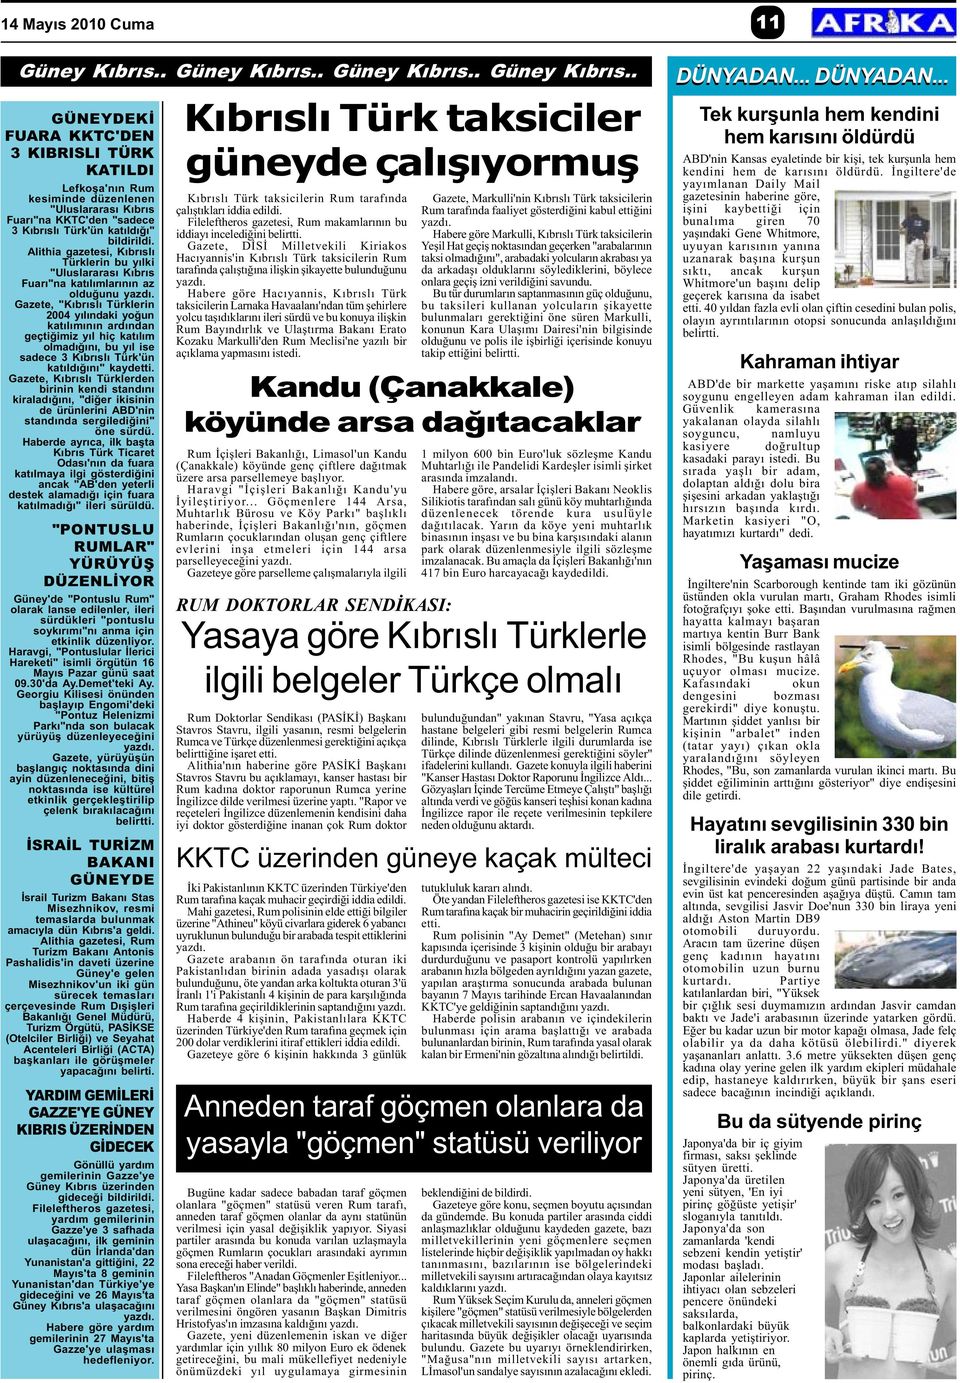 Alithia gazetesi, Kýbrýslý Türklerin bu yýlki "Uluslararasý Kýbrýs Fuarý"na katýlýmlarýnýn az olduðunu yazdý.